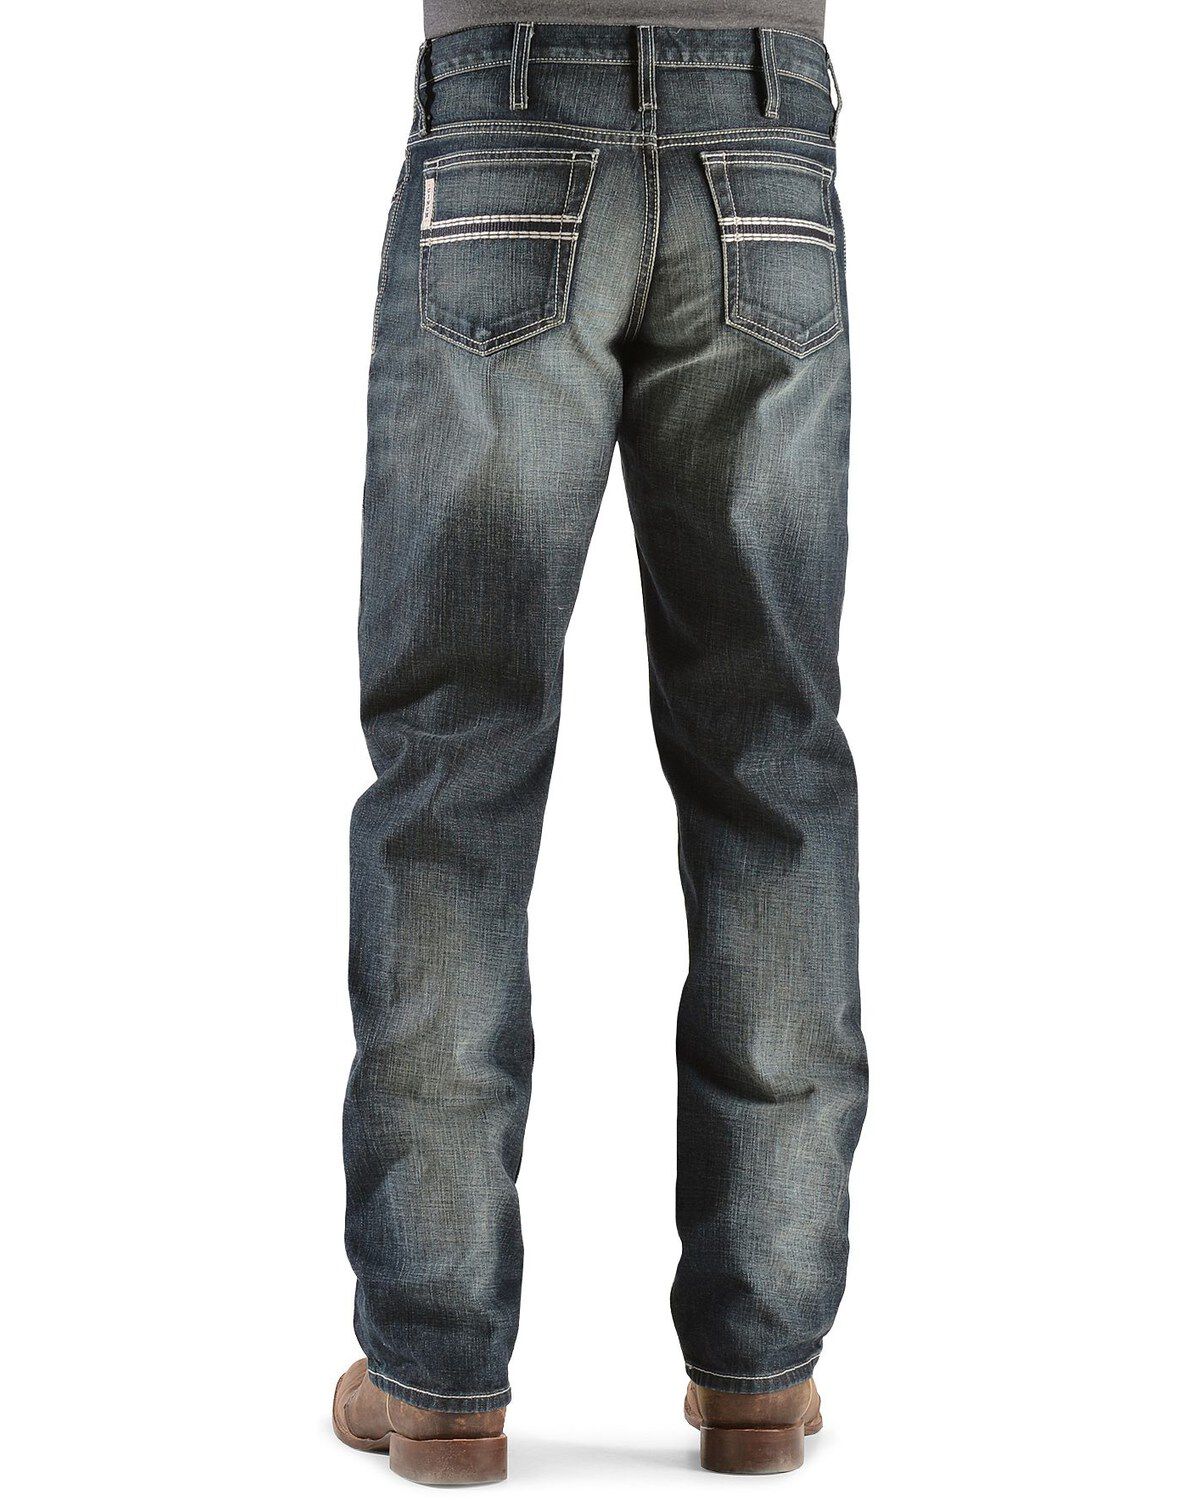 mens jeans size 46x32